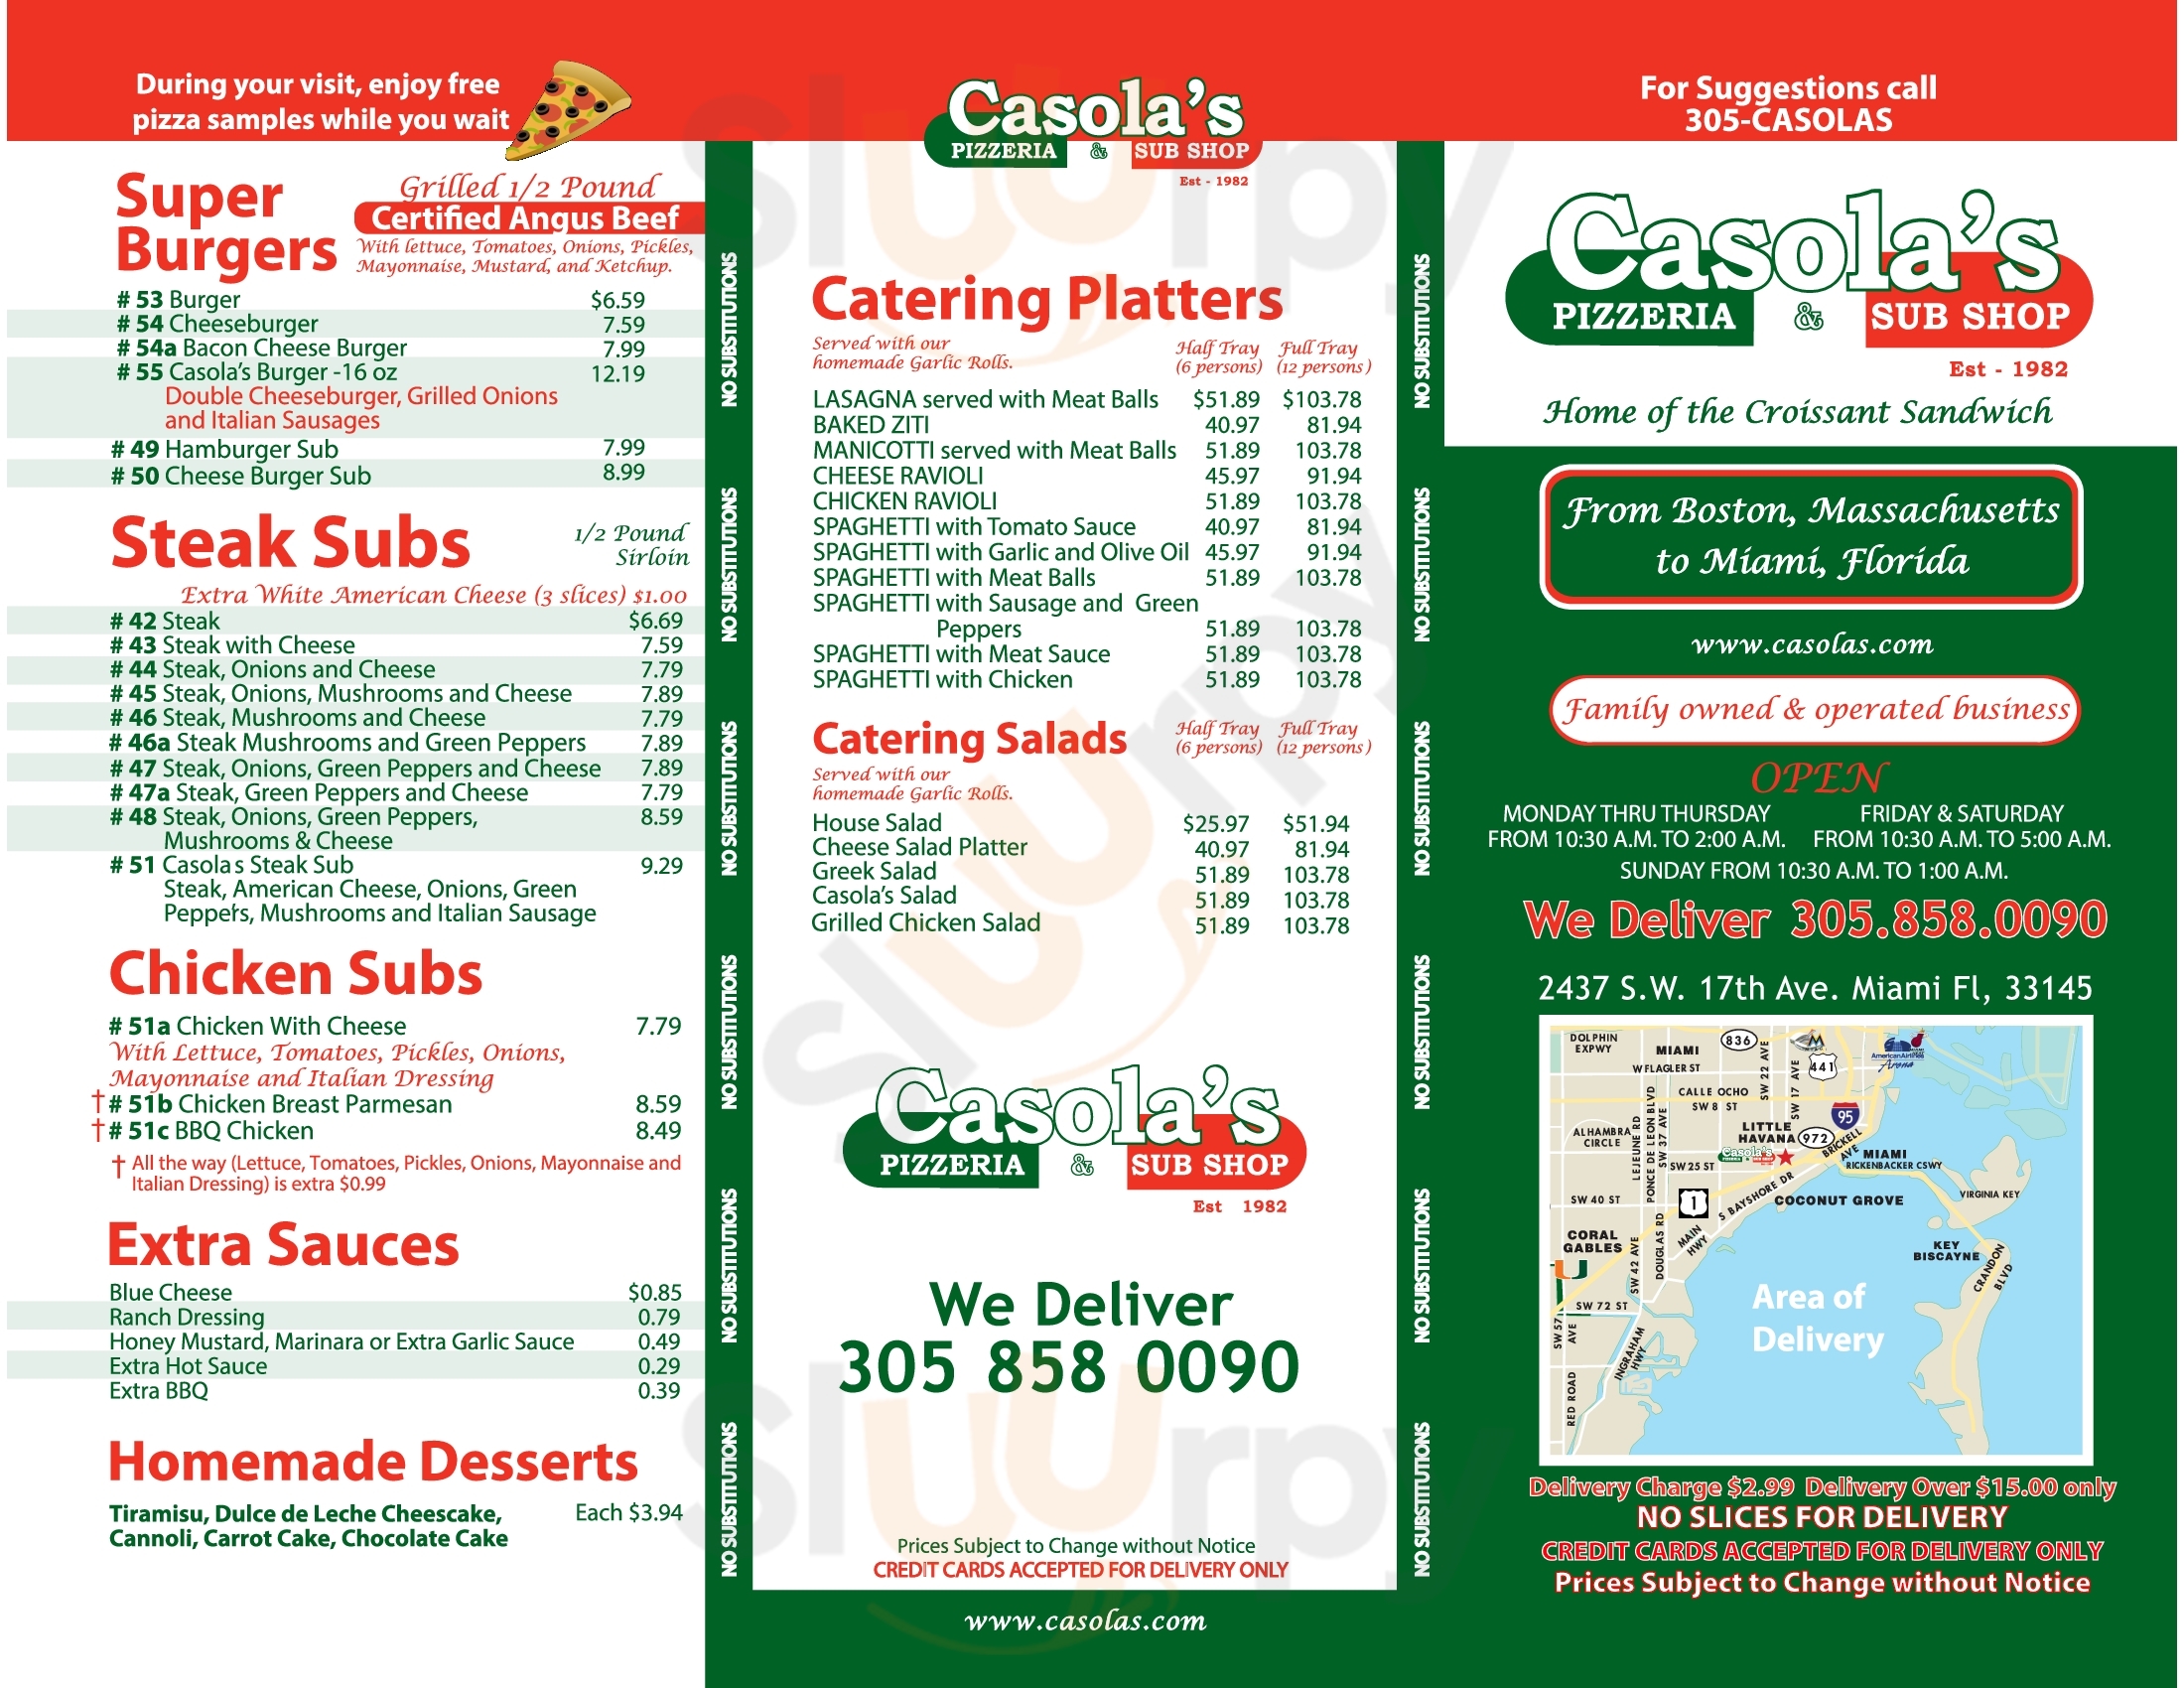 Casola's Pizzeria & Sub Shop Miami Menu - 1